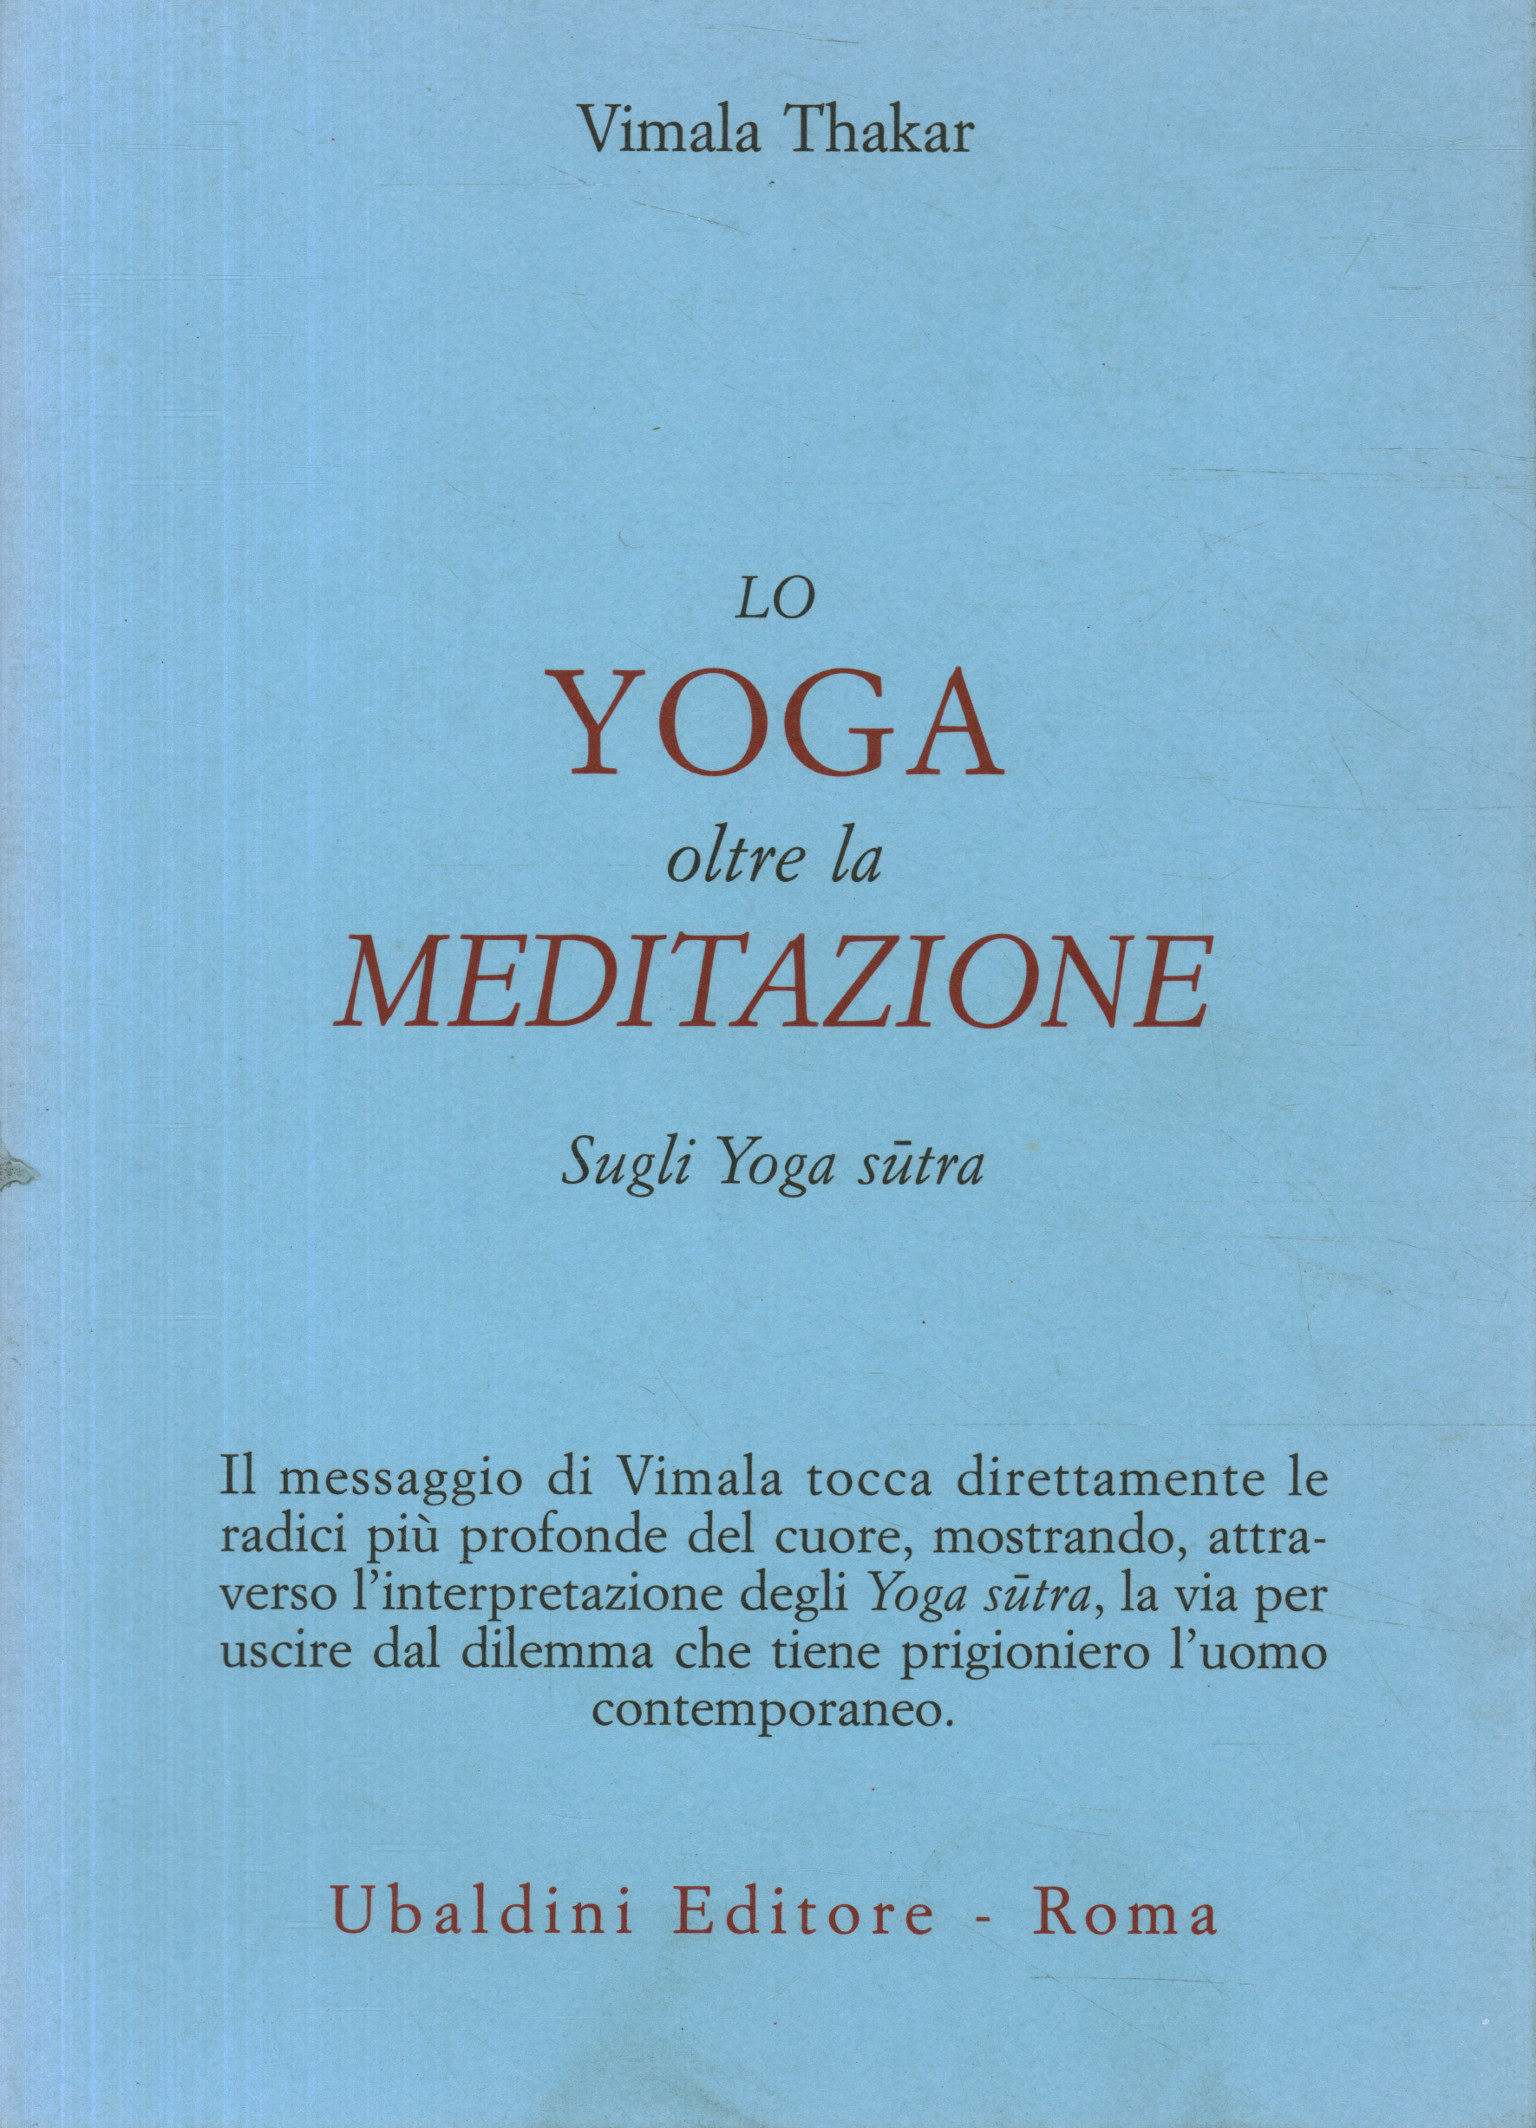 Yoga beyond meditation